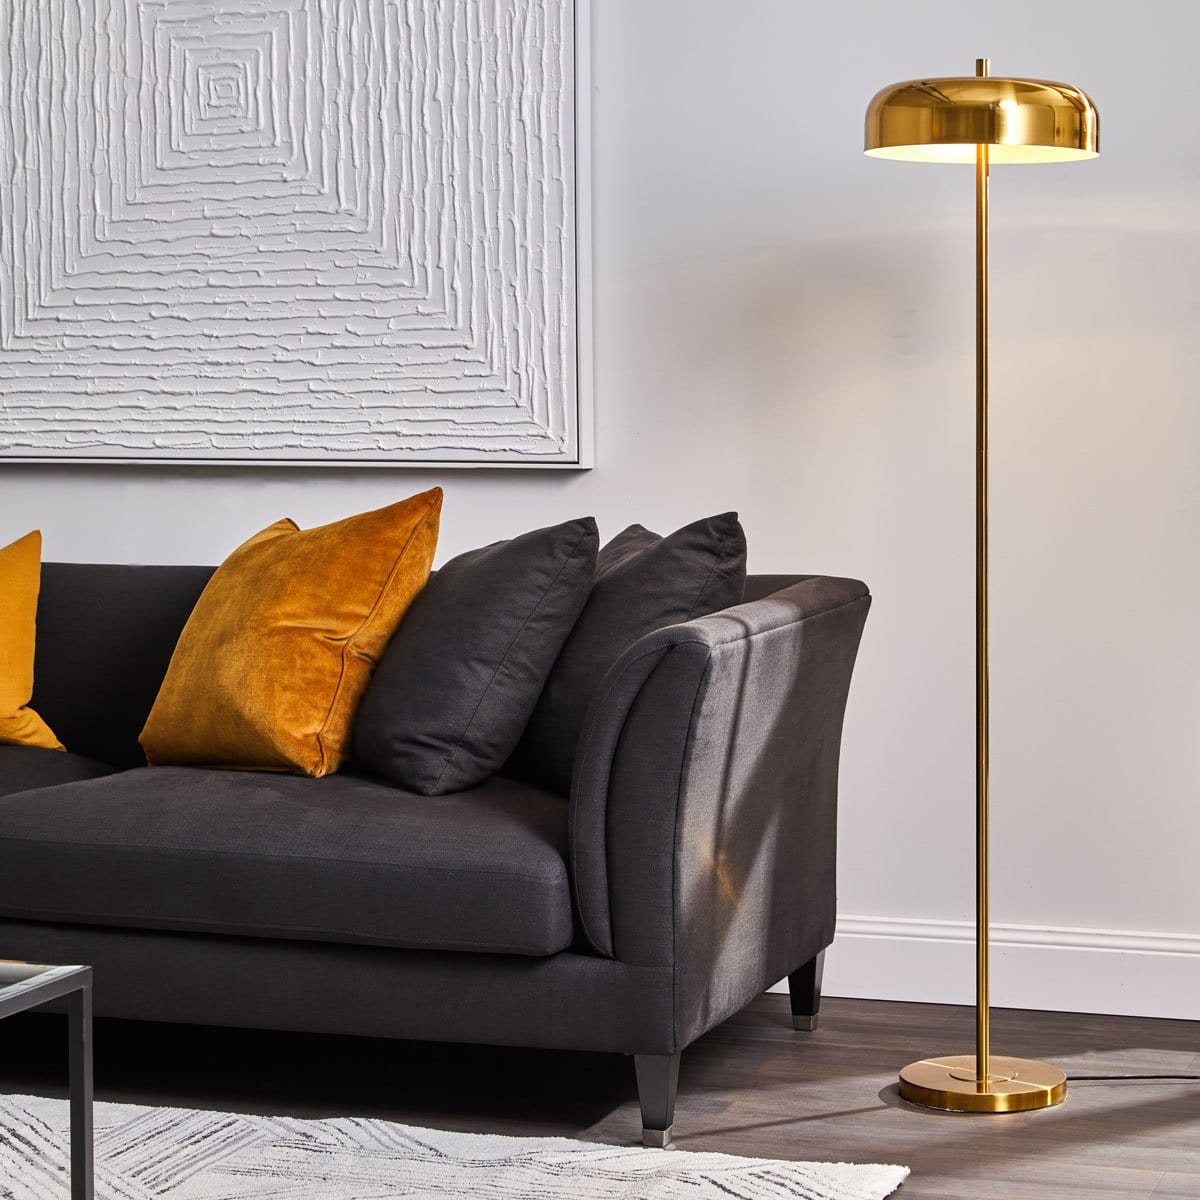 CAFE Lighting & Living Floor Standing Lamps Sachs Floor Lamp - Polished Brass 12310